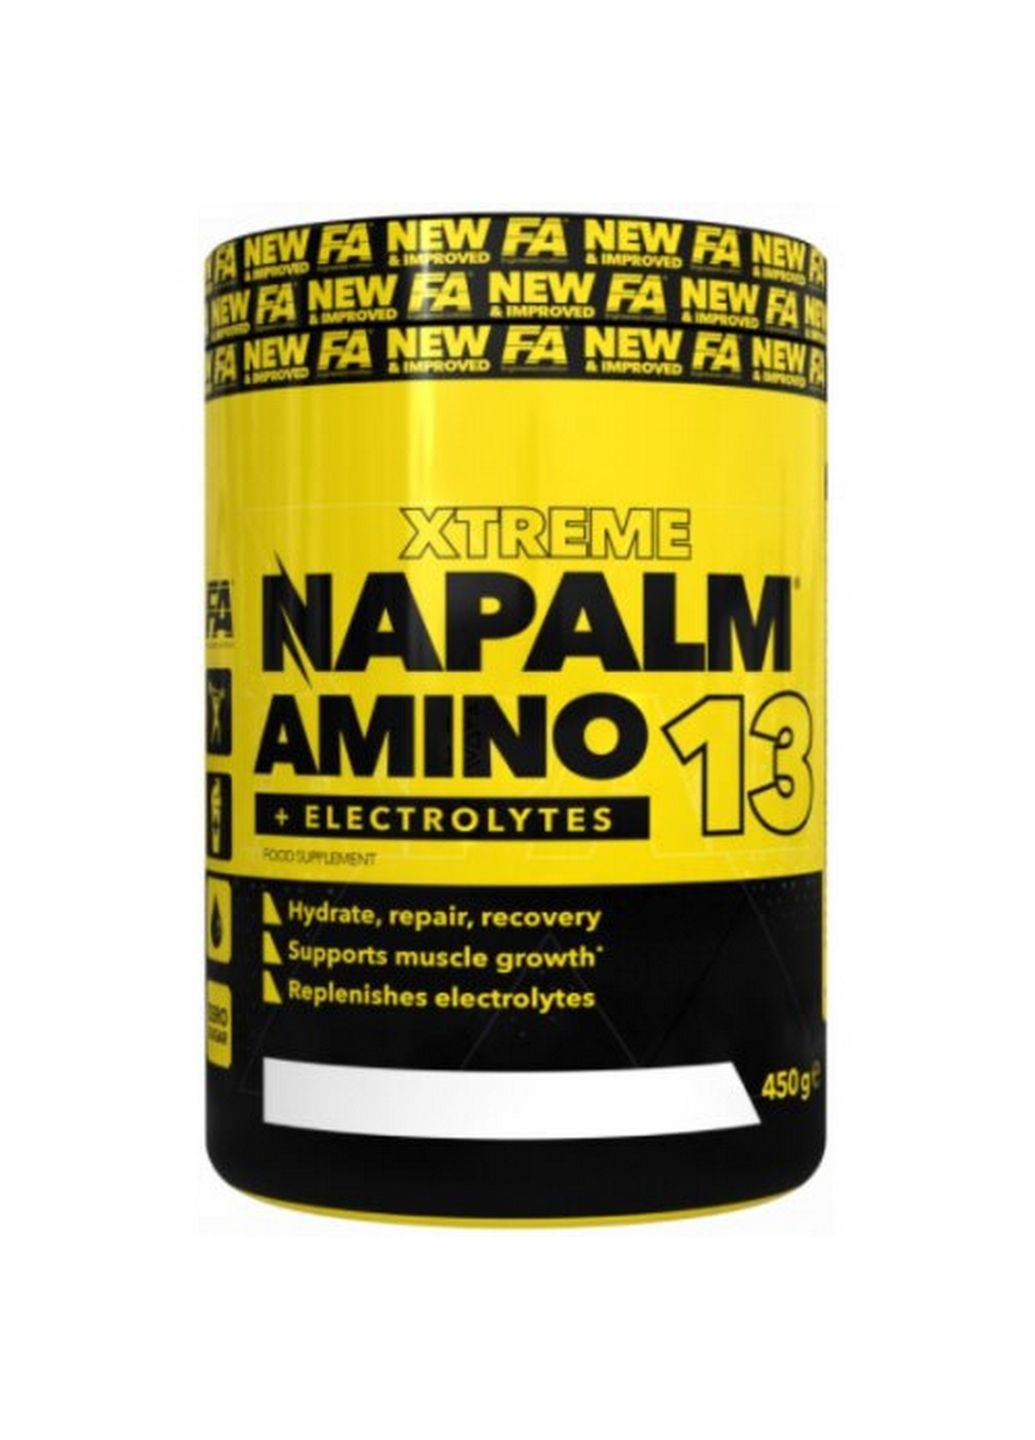 Аминокислота Napalm Amino13, 450 грамм Фруктовый Fitness Authority (293417309)